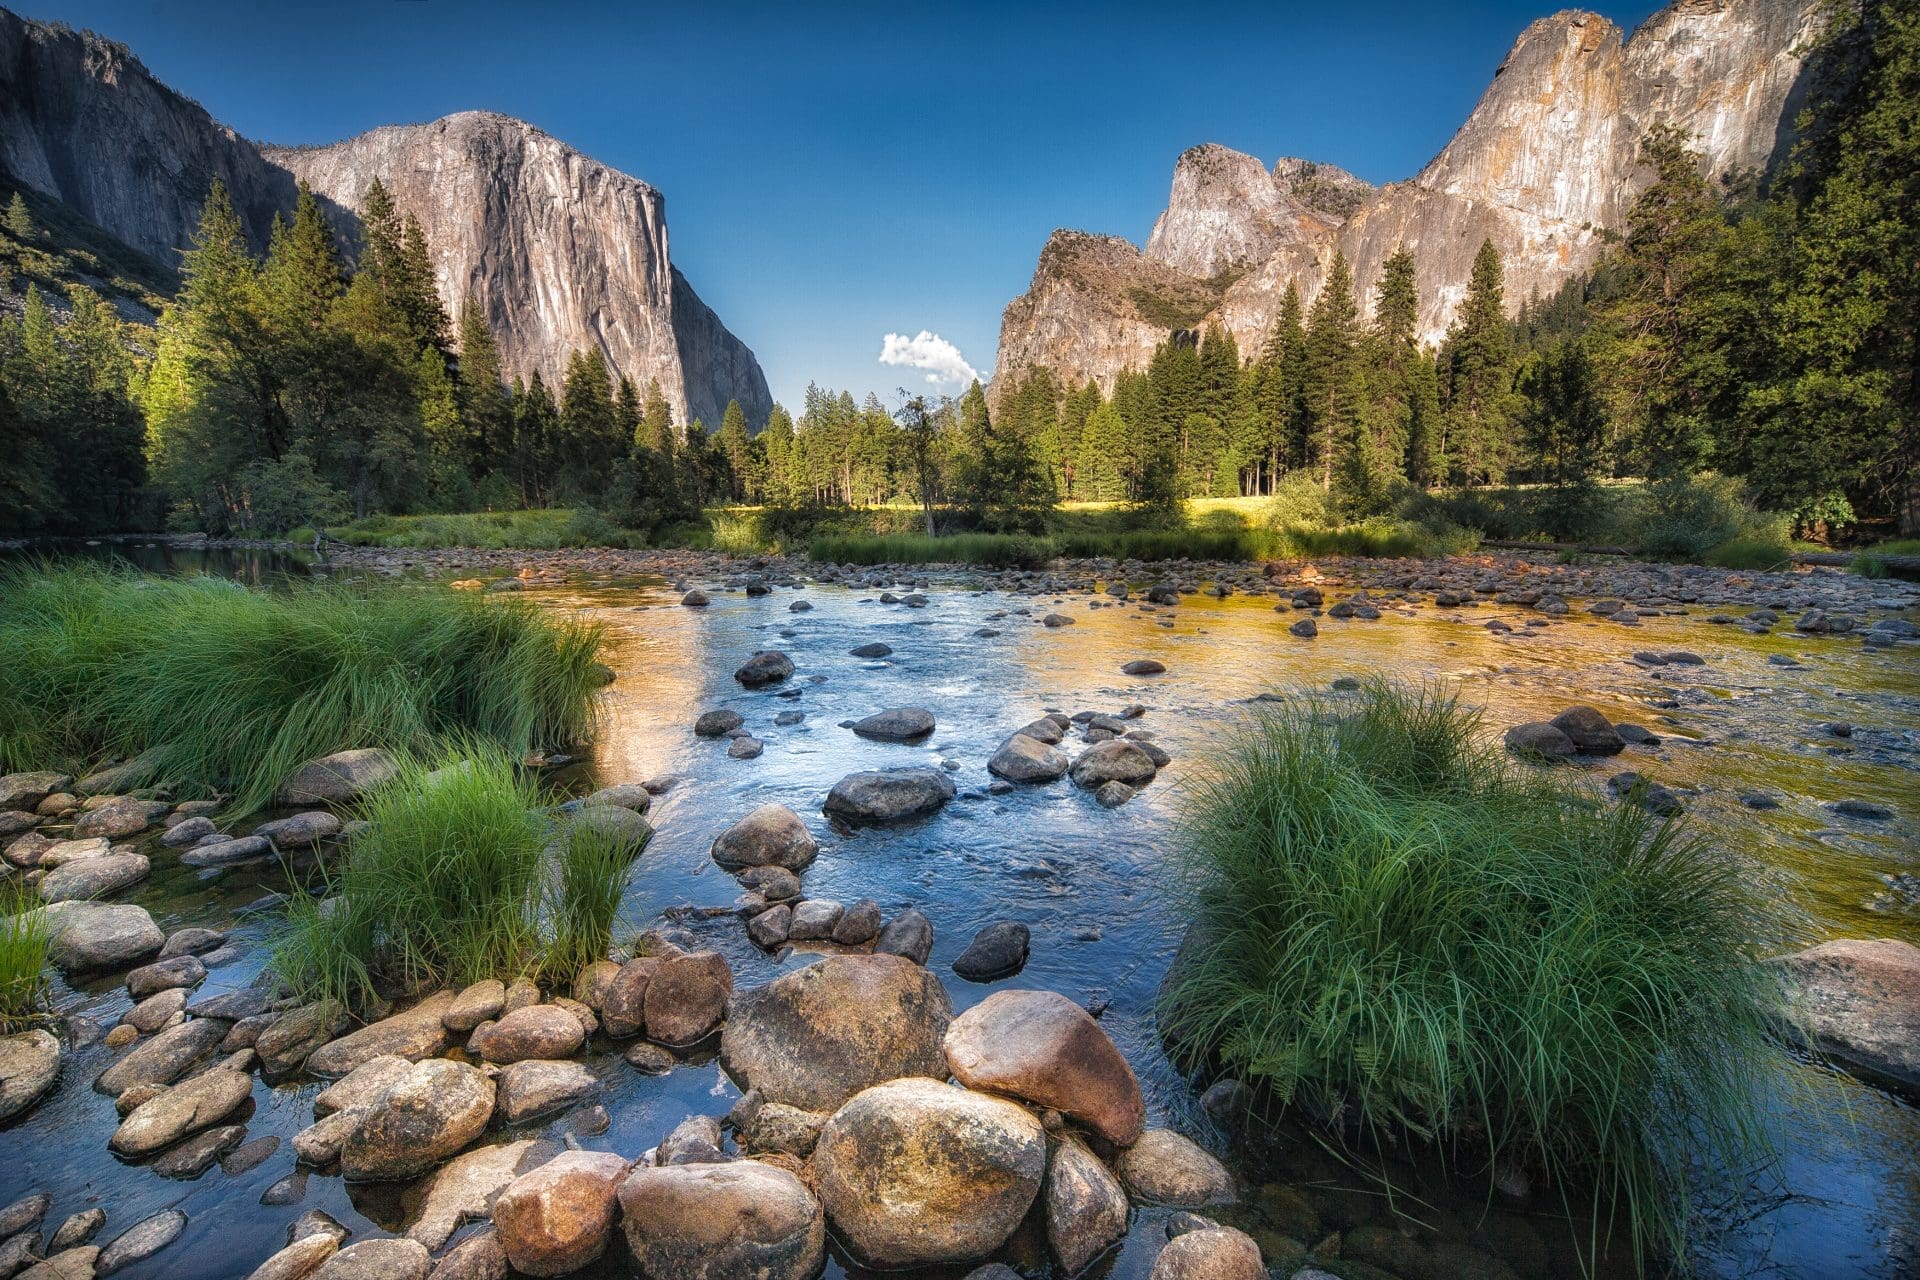 Should I Visit Yosemite or Yellowstone First?